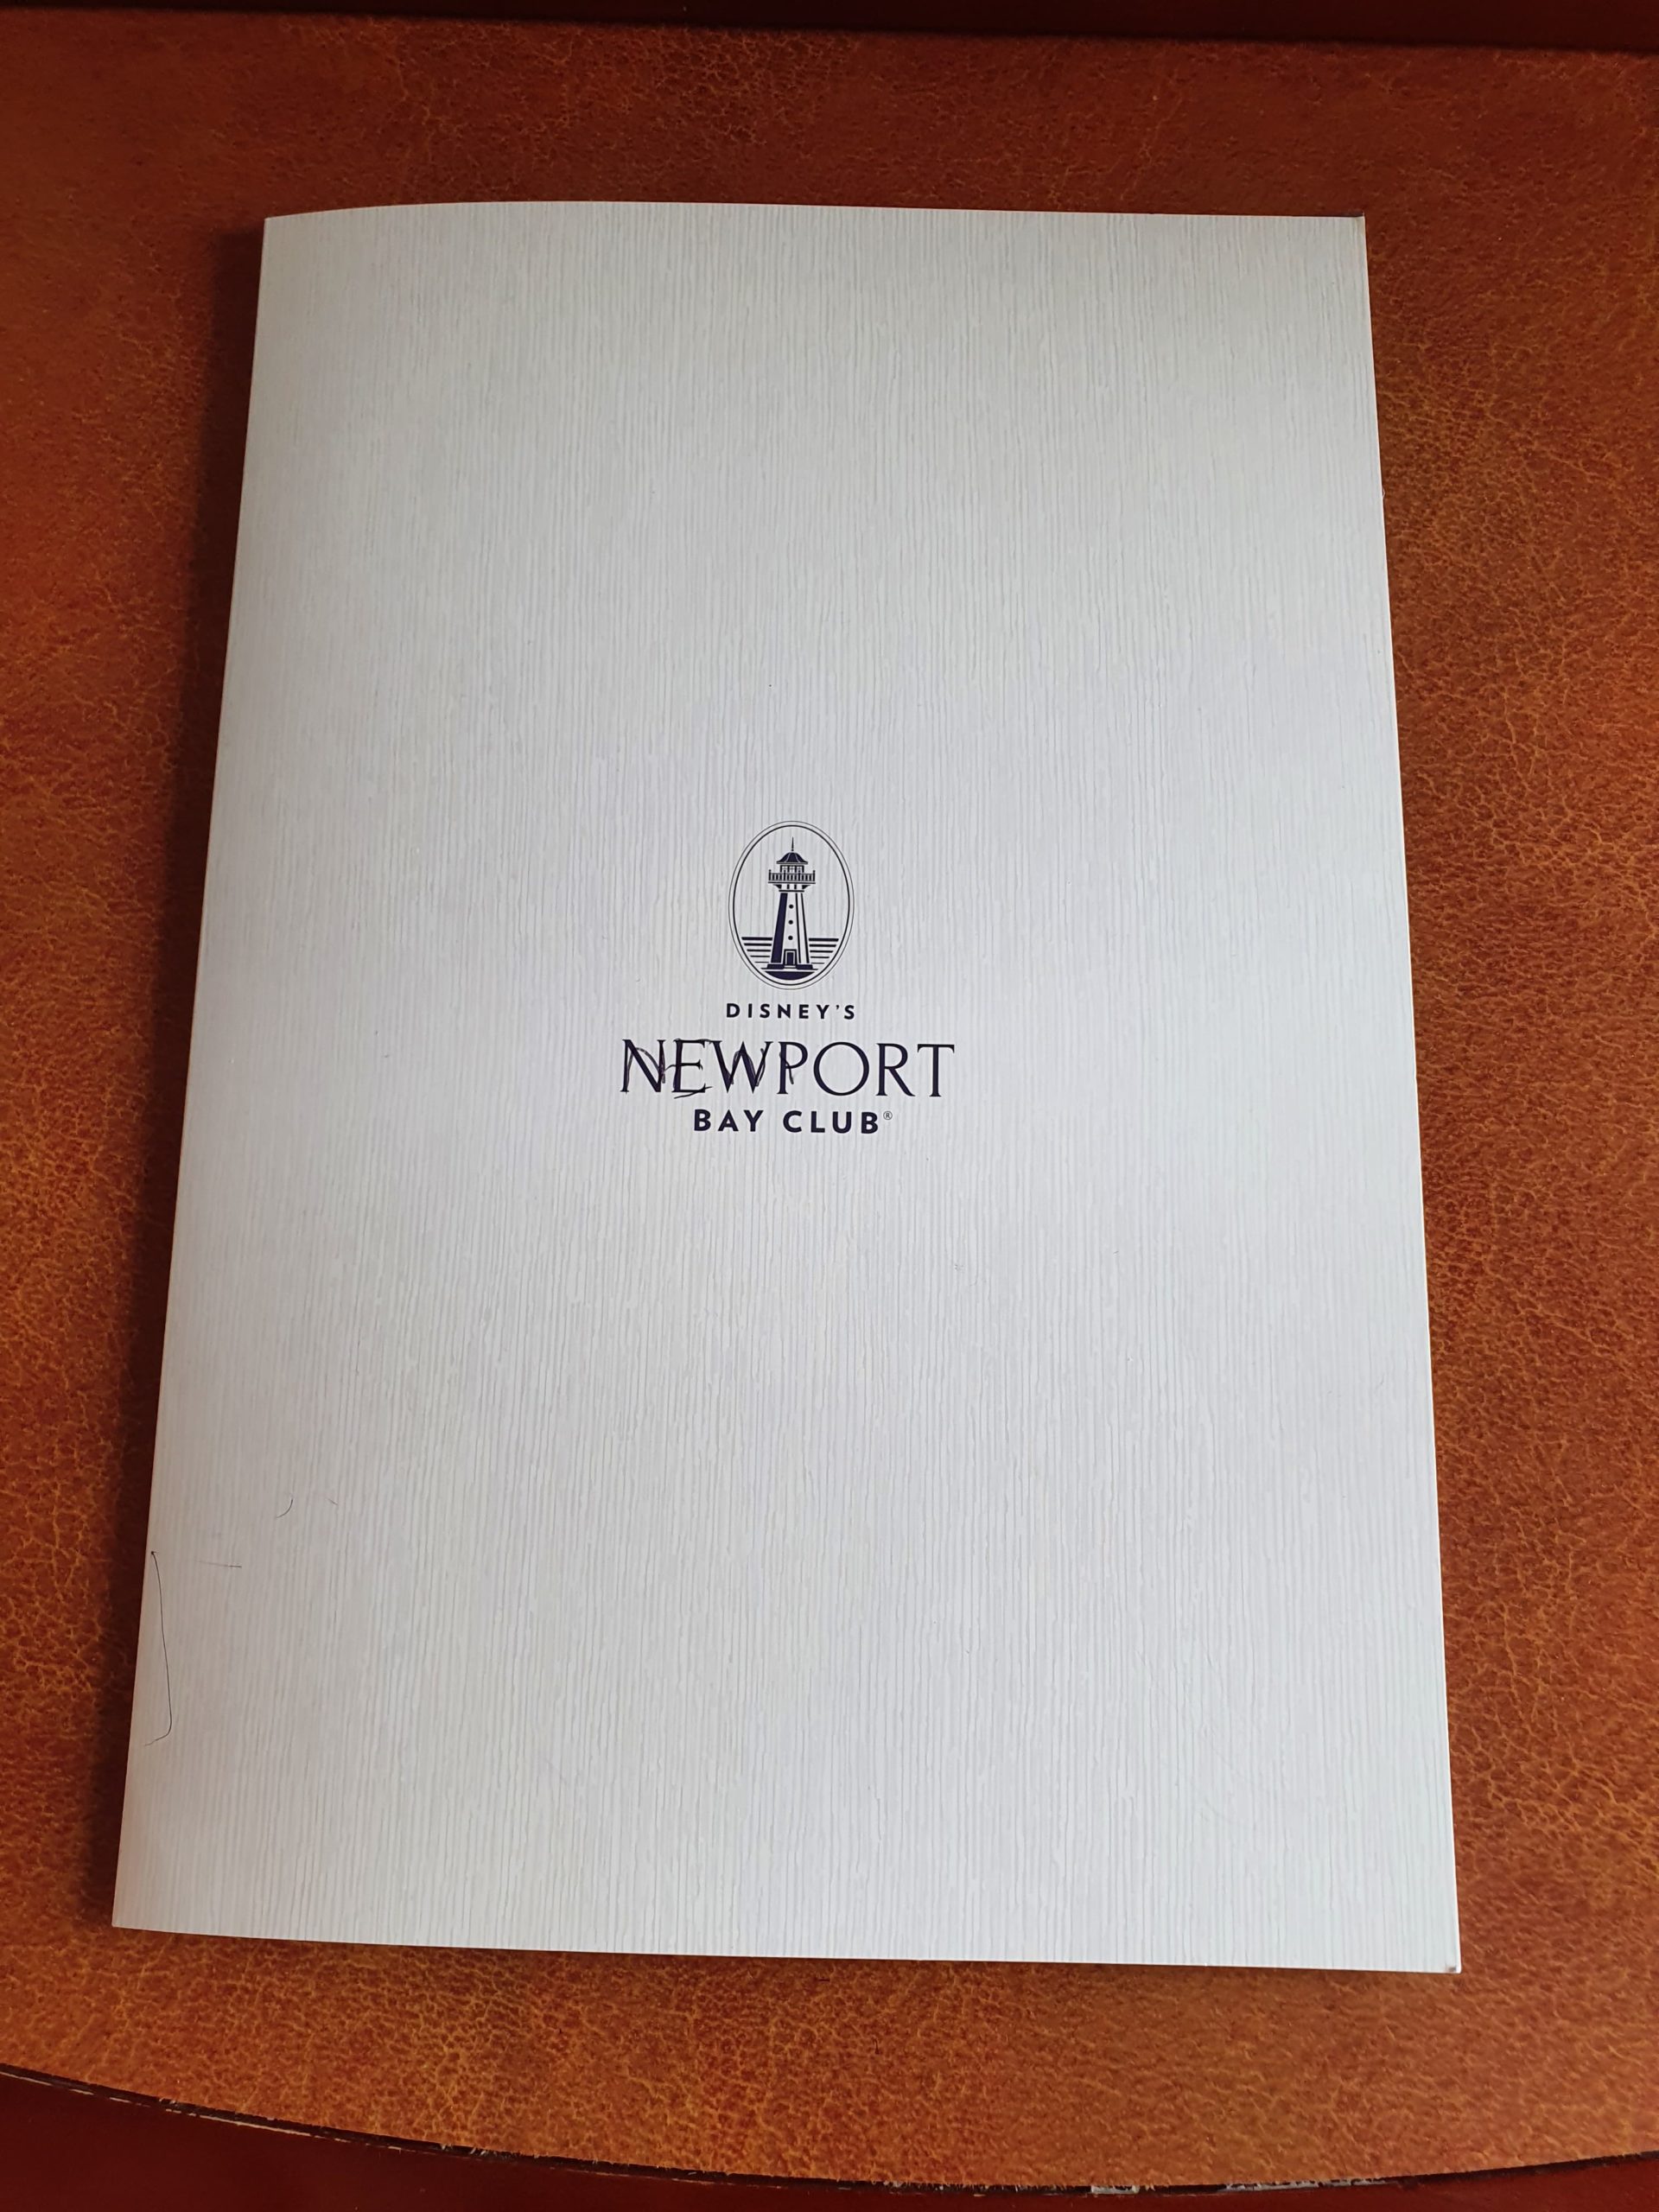 livret bienvenue hôtel Newport Bay Club de Disney Paris